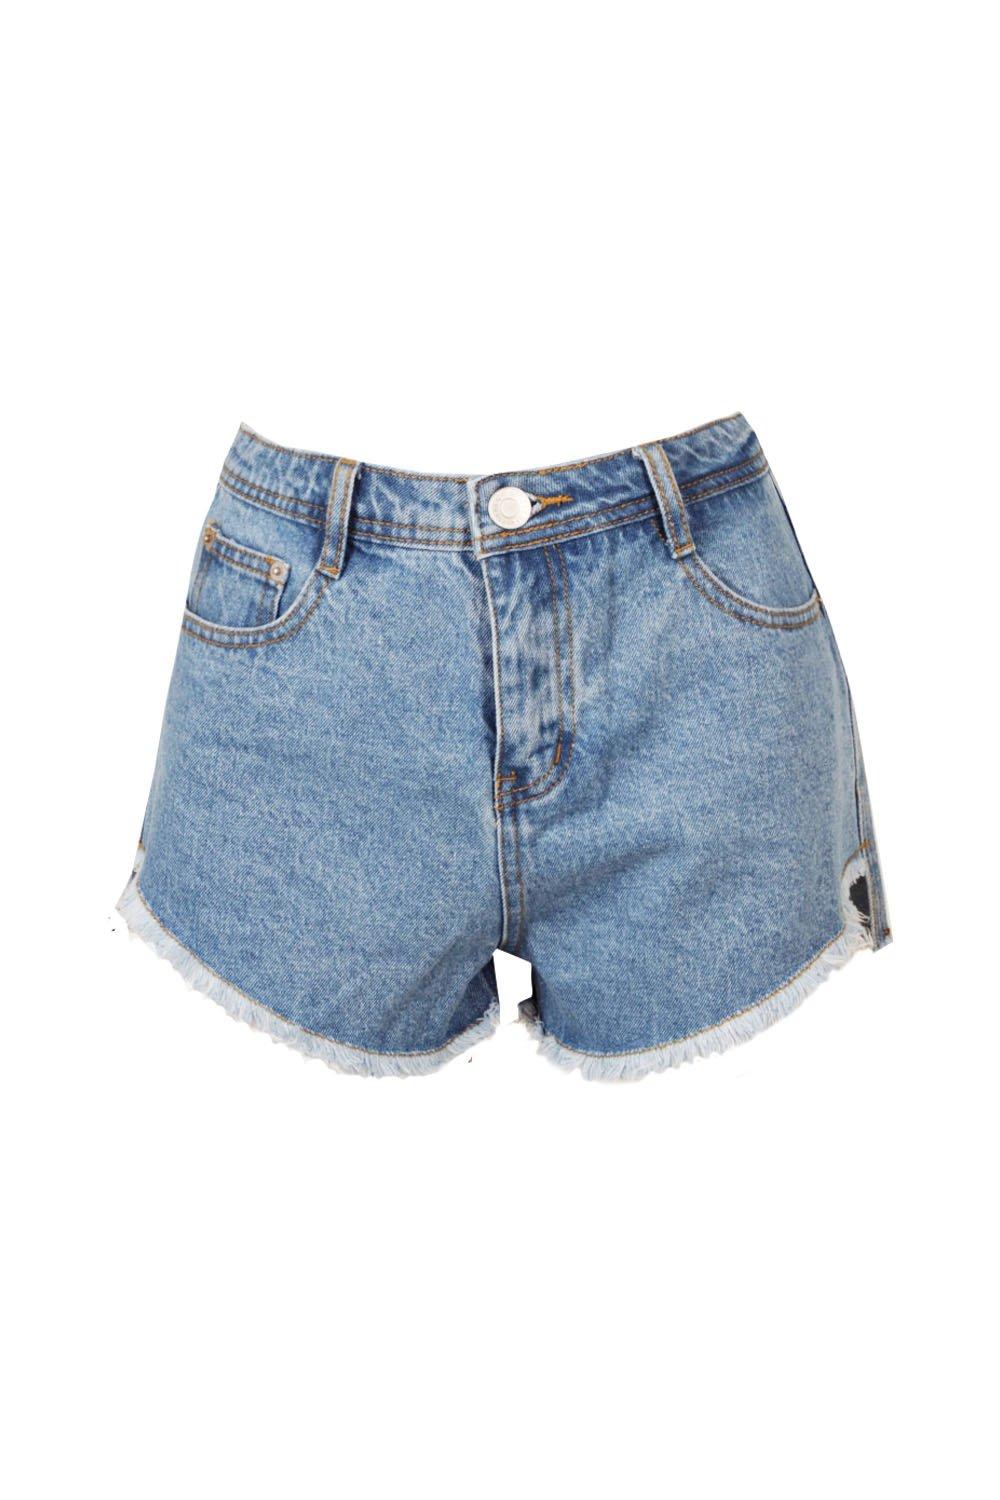 tassel jean shorts